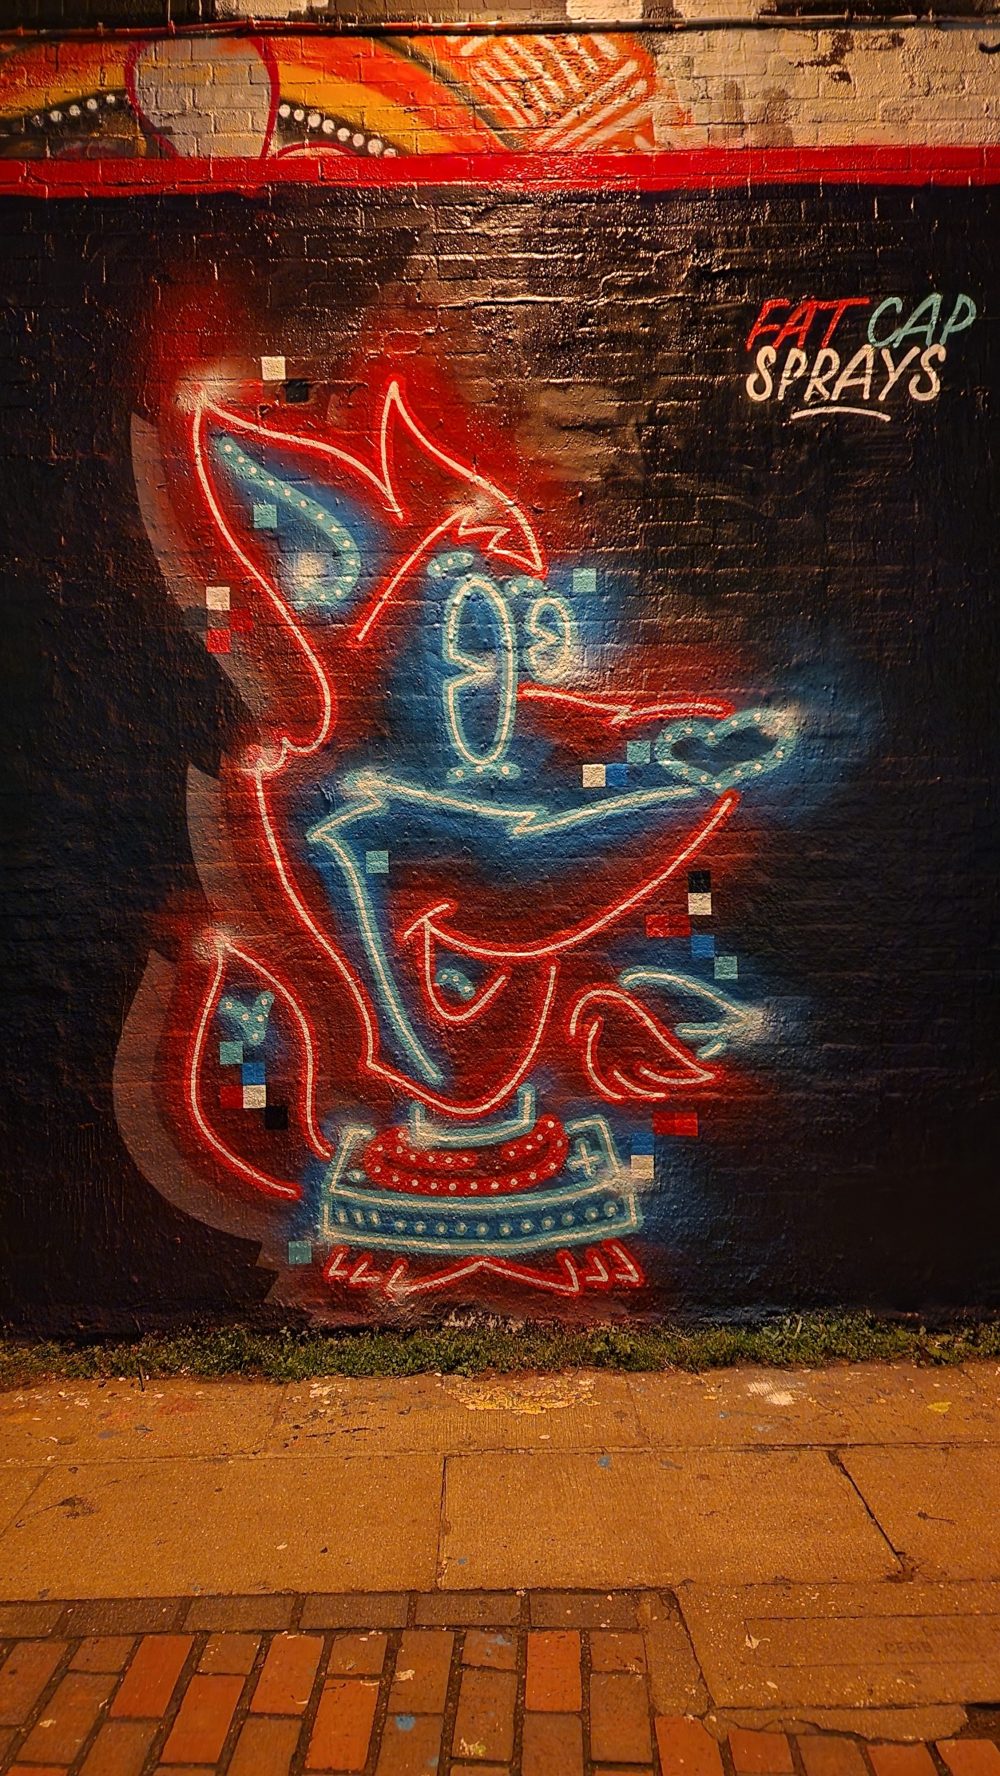 To Street Art ζωντανεύει τη νύχτα σε συνεργασία με τη Samsung και τον Fat Cap Sprays